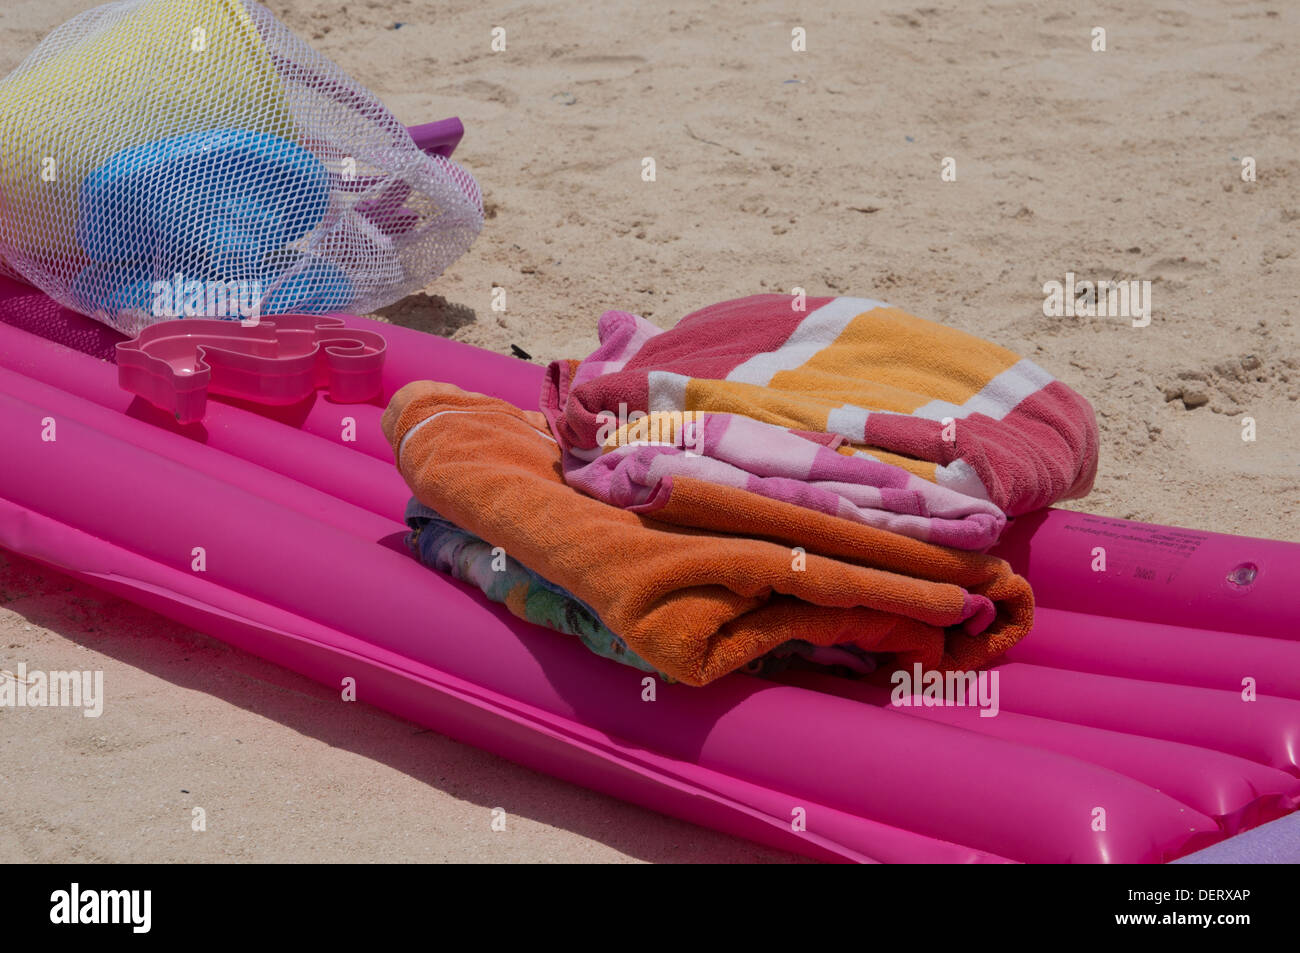 floating beach toys